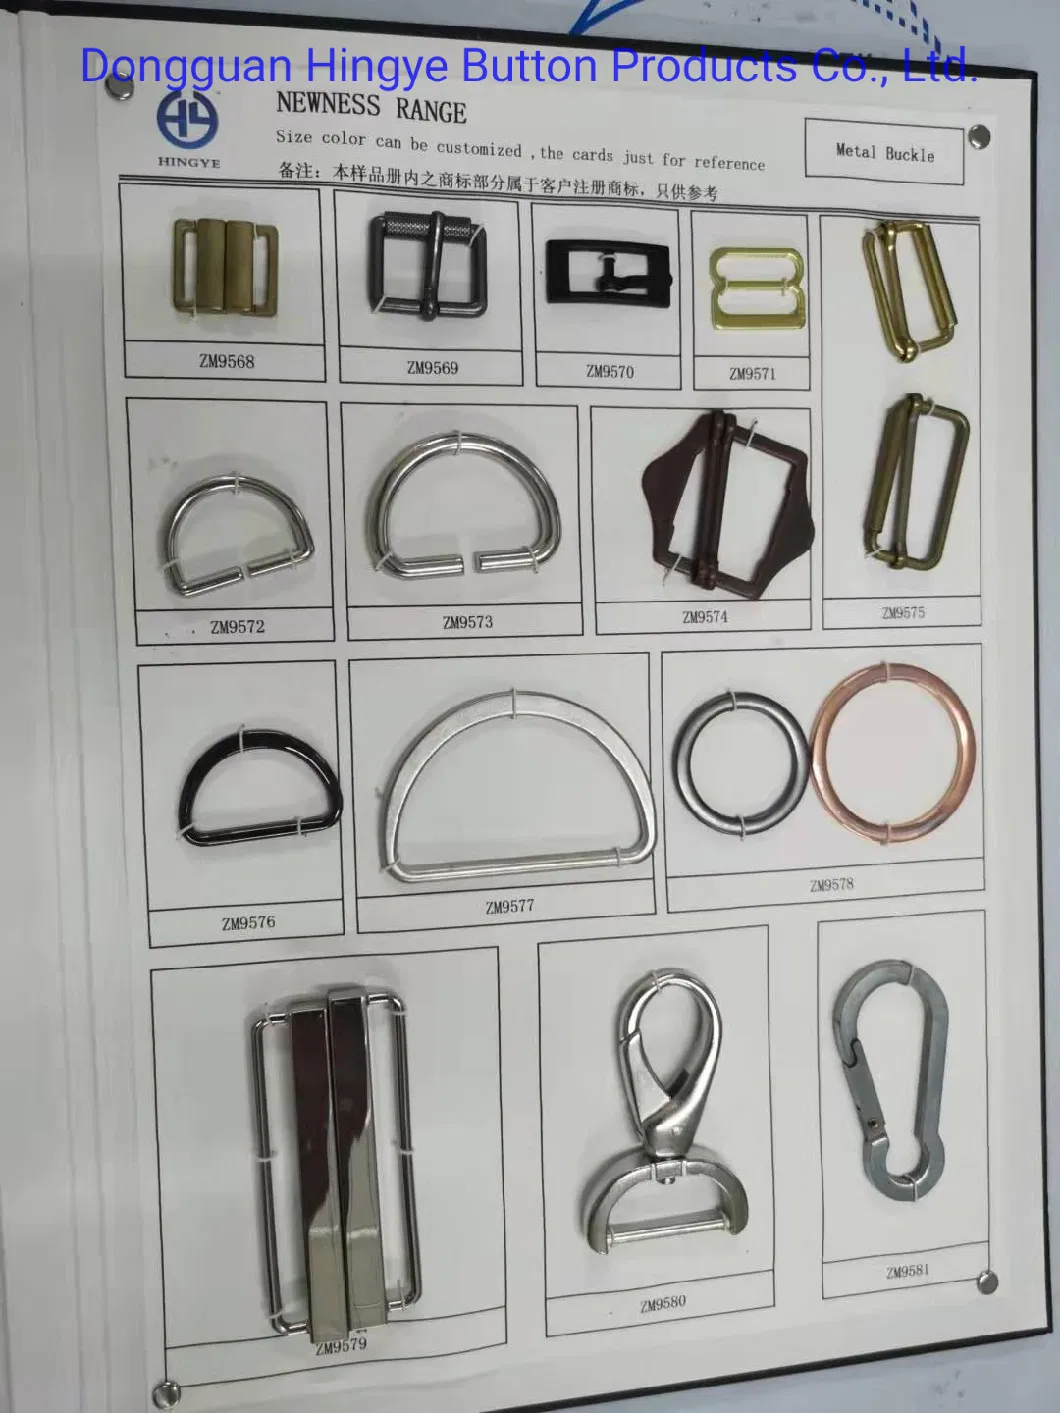 Metal Buckle Brass Sheet Metal Adjustable Slider Buckles for Schoolbags Accessories